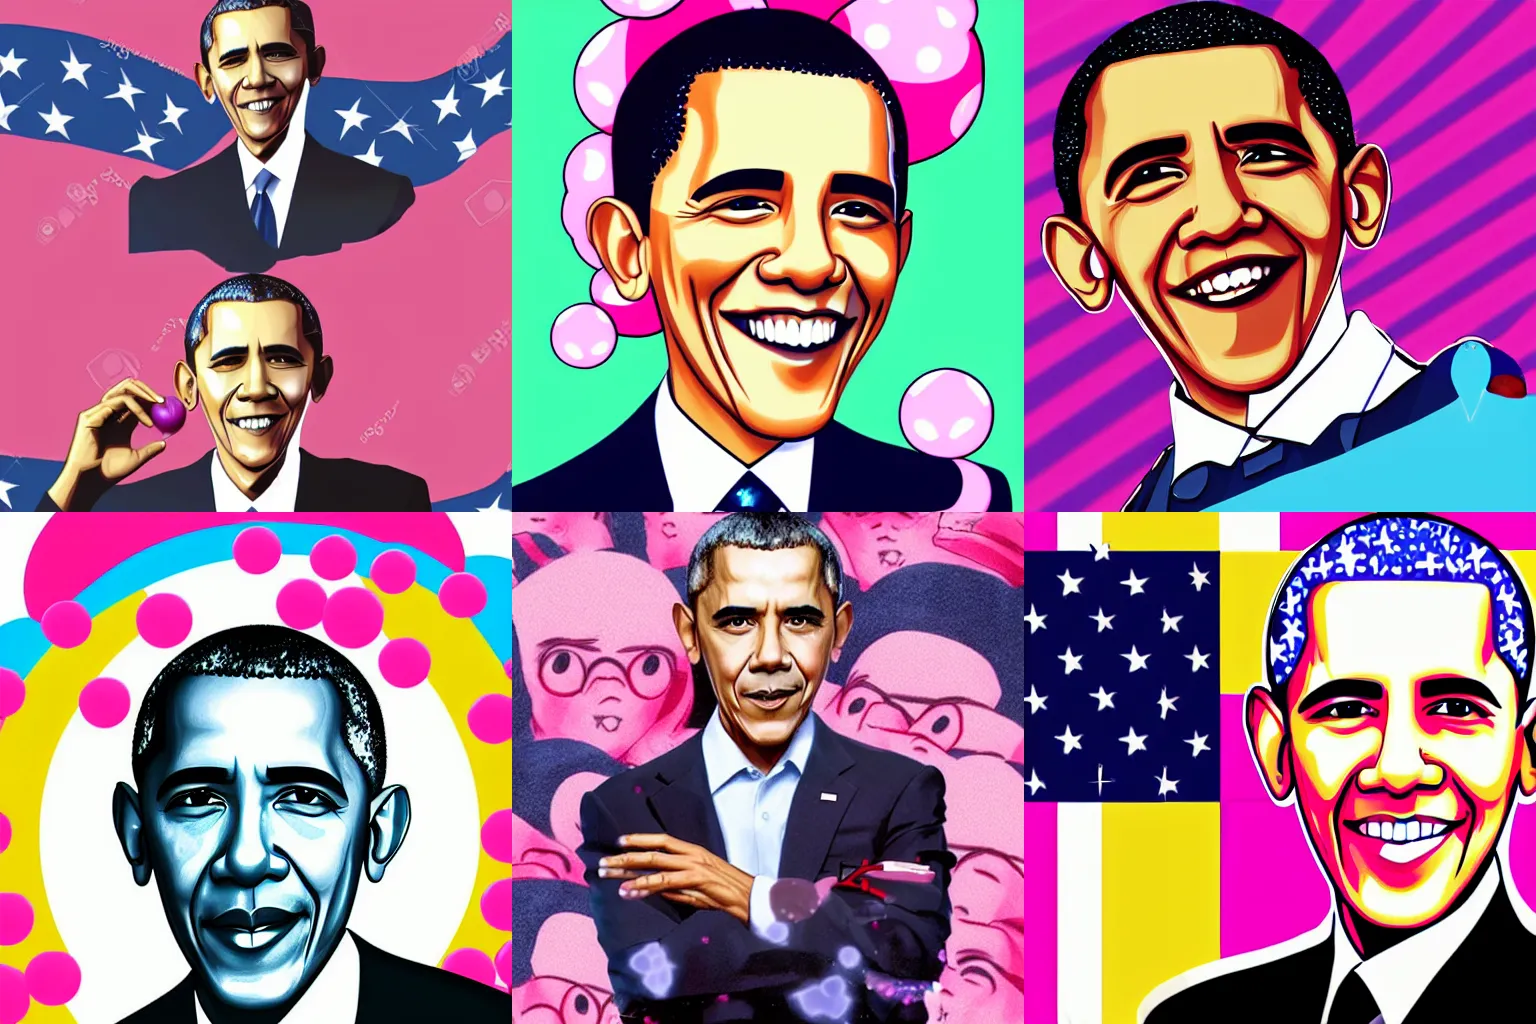 Prompt: portrait of barack obama, anime style, kawaii, bubblegum pop fashion